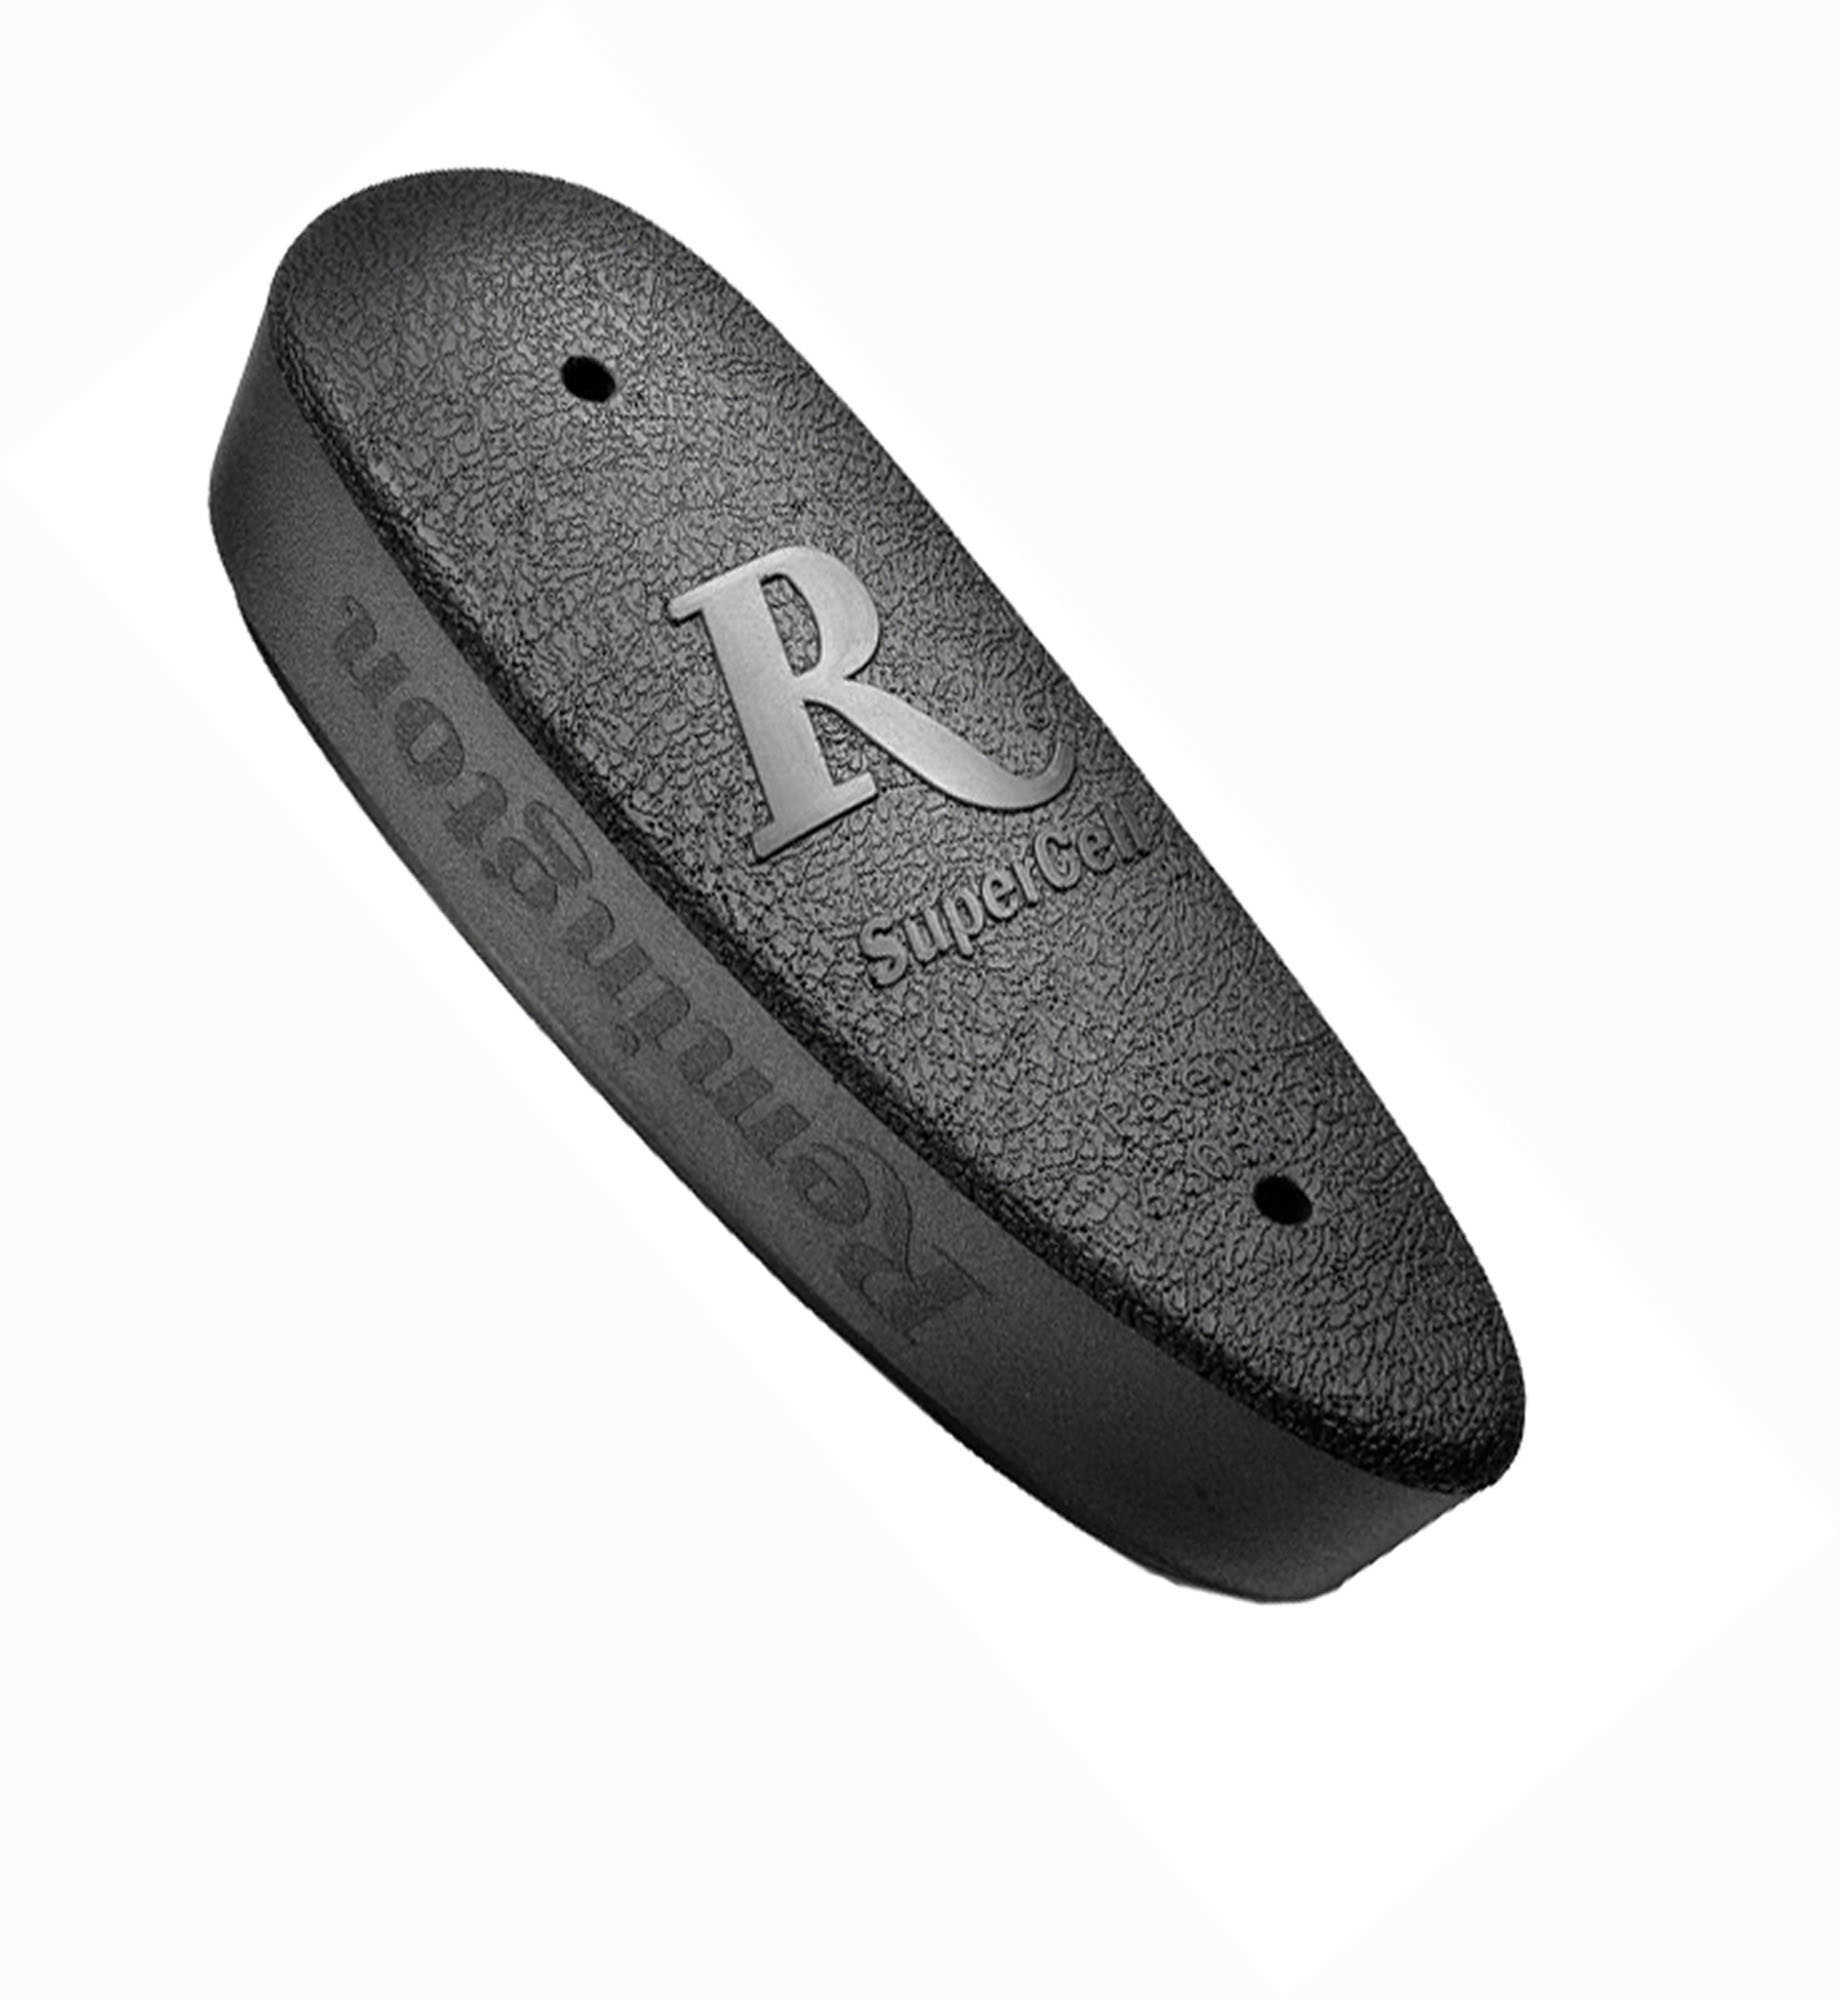 Remington Recoil Pad Super Cell 1" Black For SHTGNS W/Syn Stocks